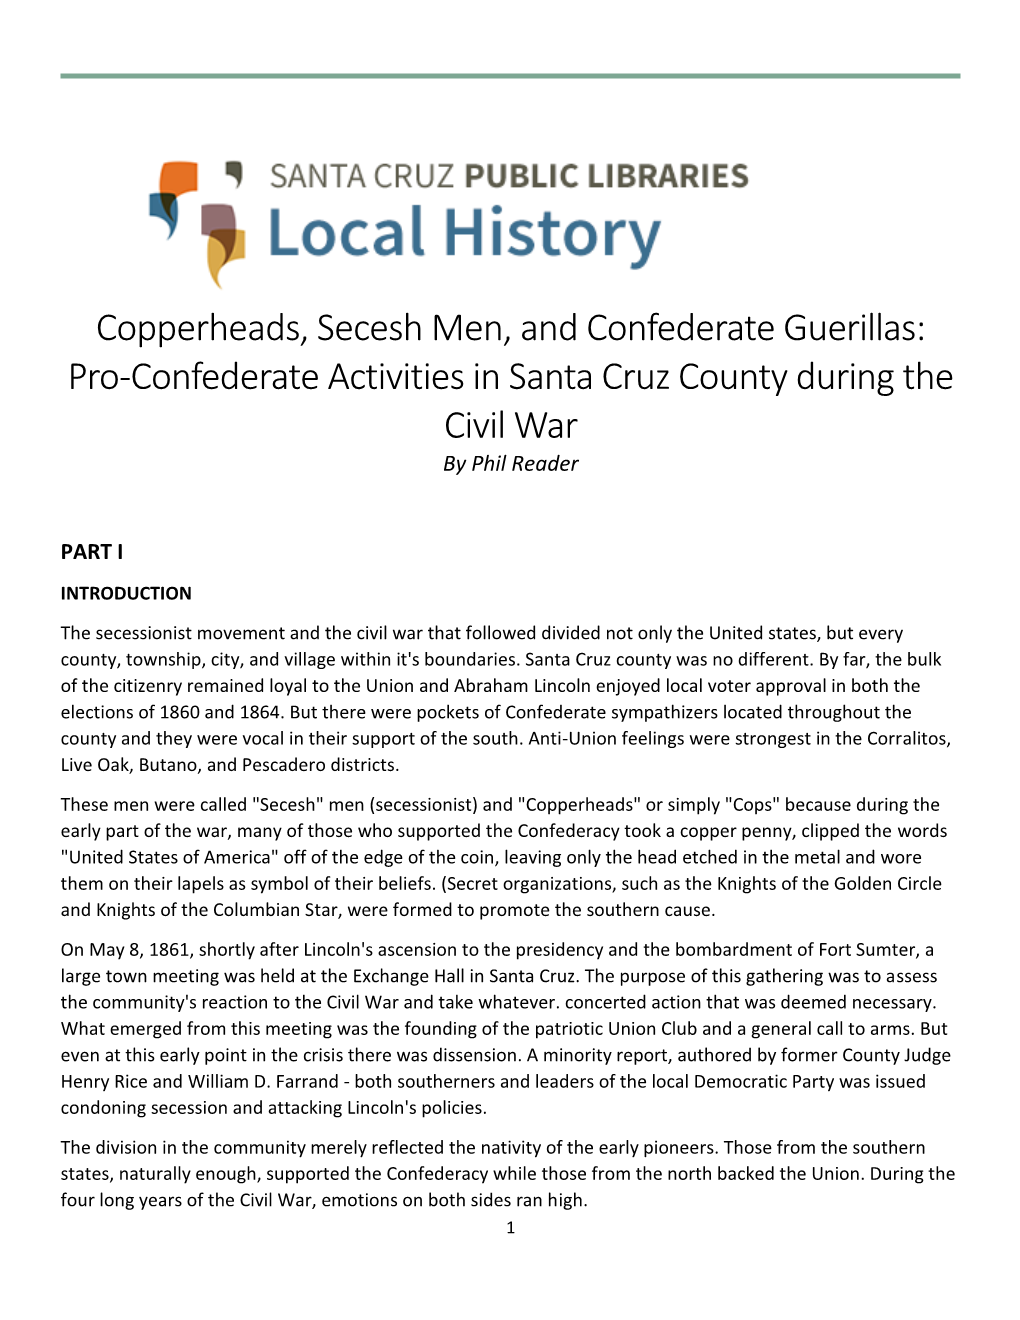 Copperheads, Secesh Men, and Confederate Guerillas: Pro-Confederate Activities in Santa Cruz County During the Civil War by Phil Reader